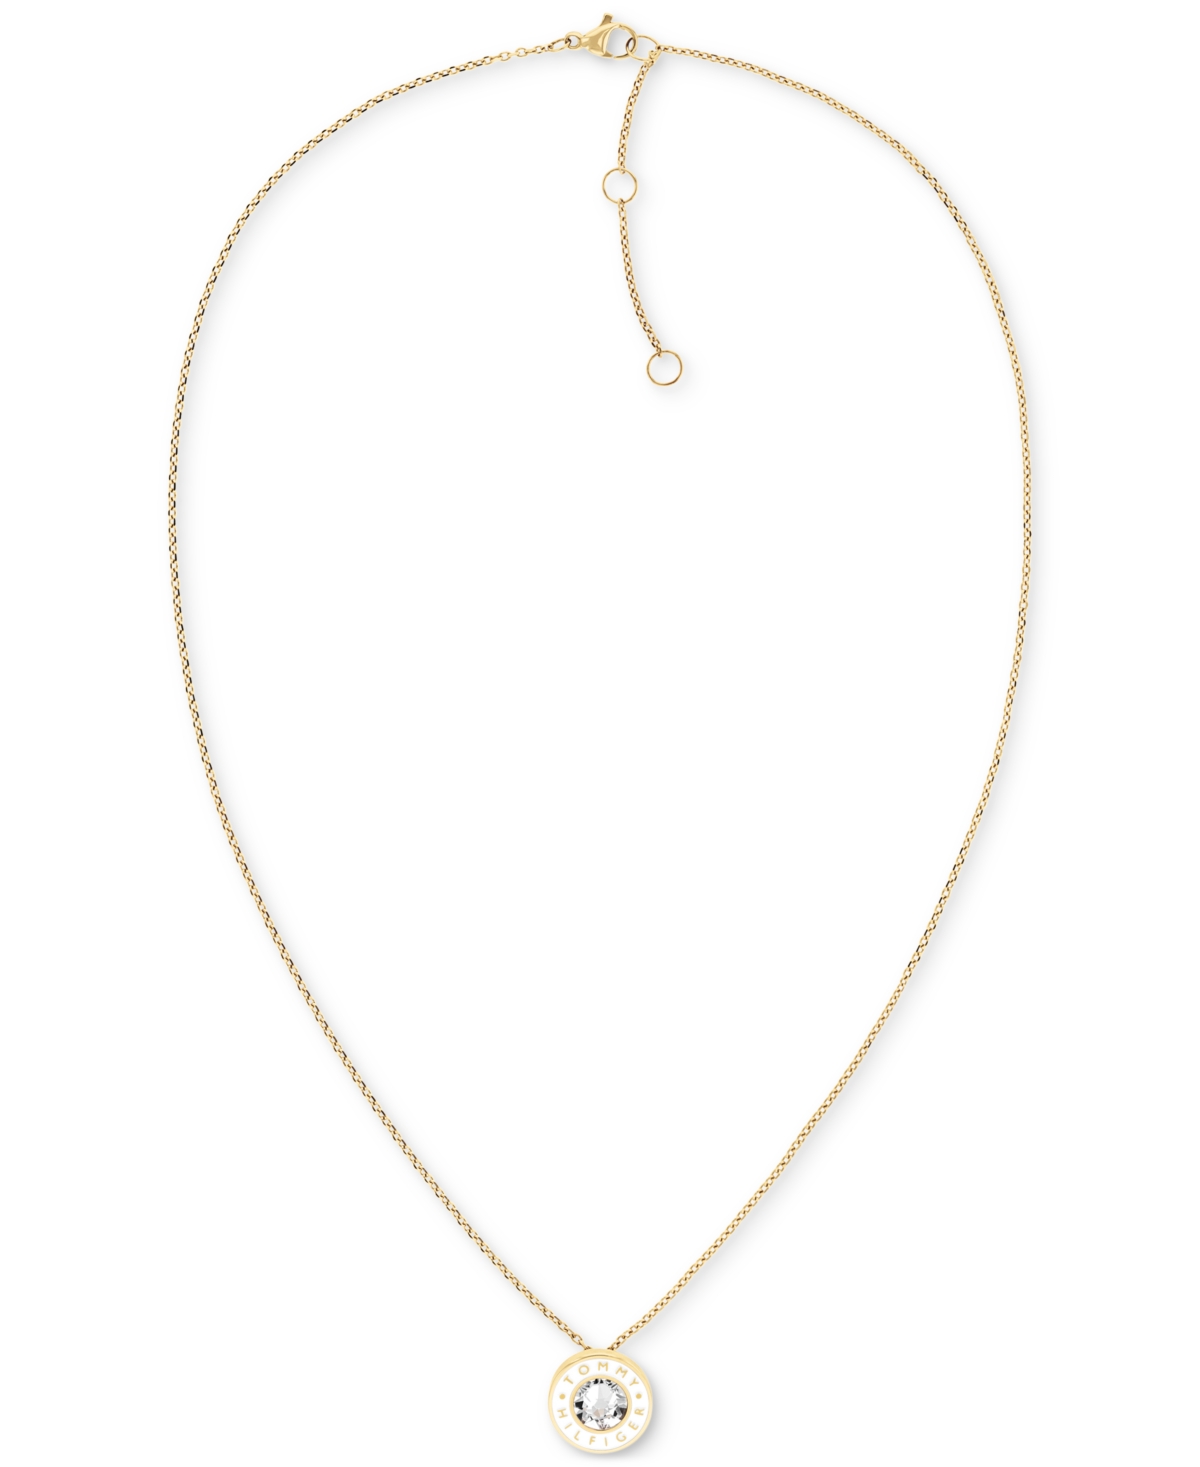 Gold-Tone White Stone Pendant Necklace, 18" + 2" extender - Gold